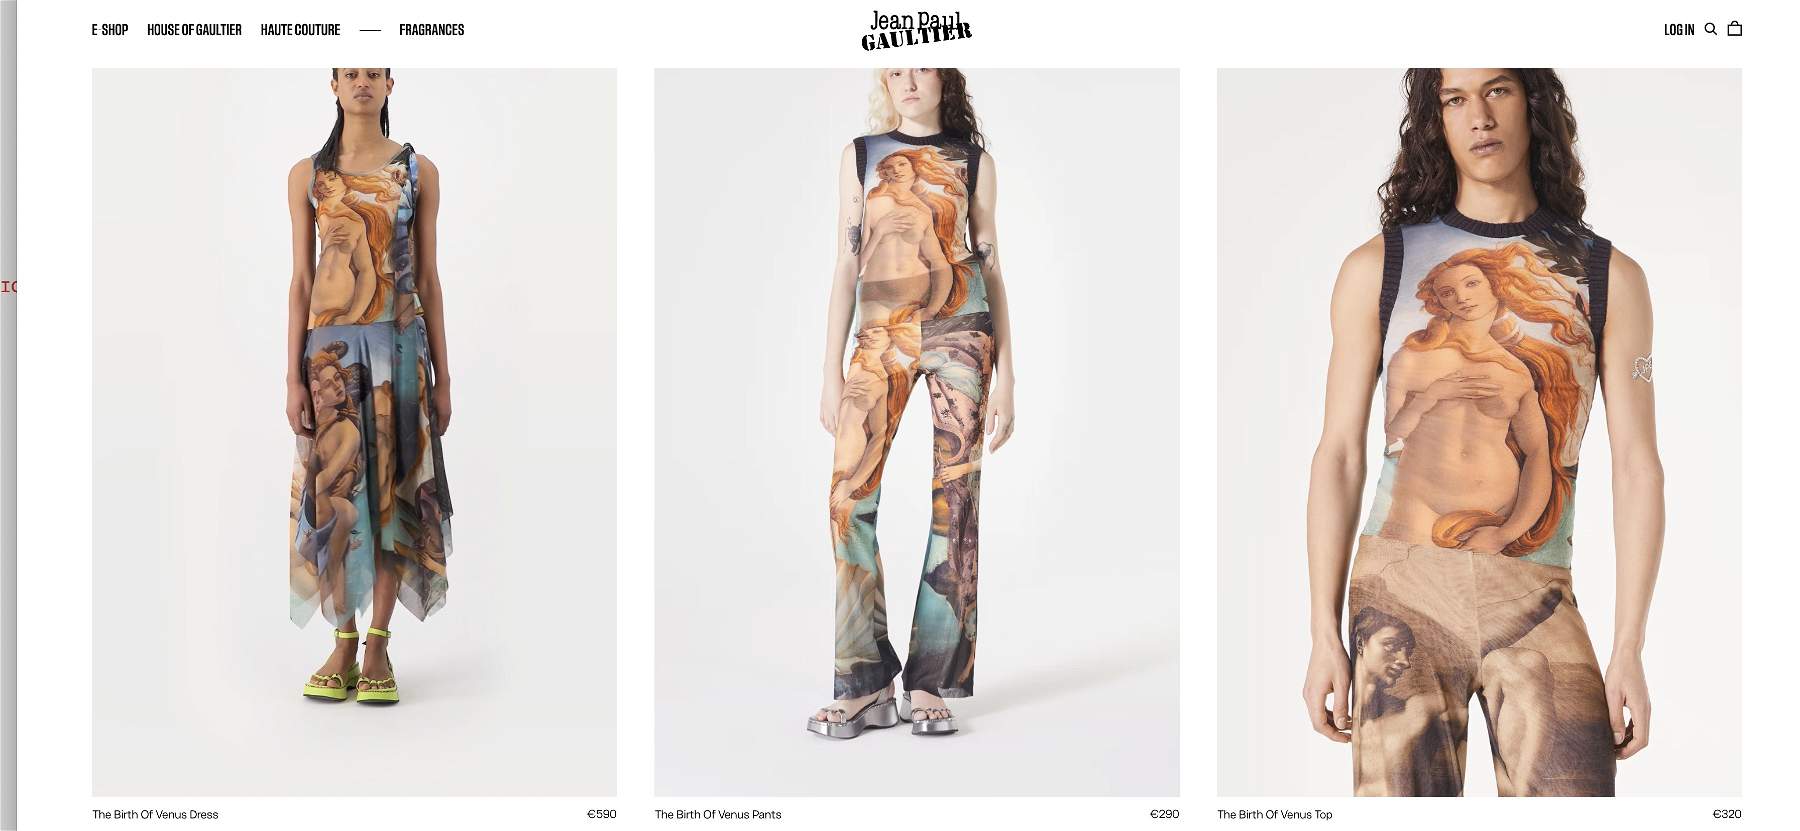 Uffizi sues Jean Paul Gaultier over Venus image on clothes